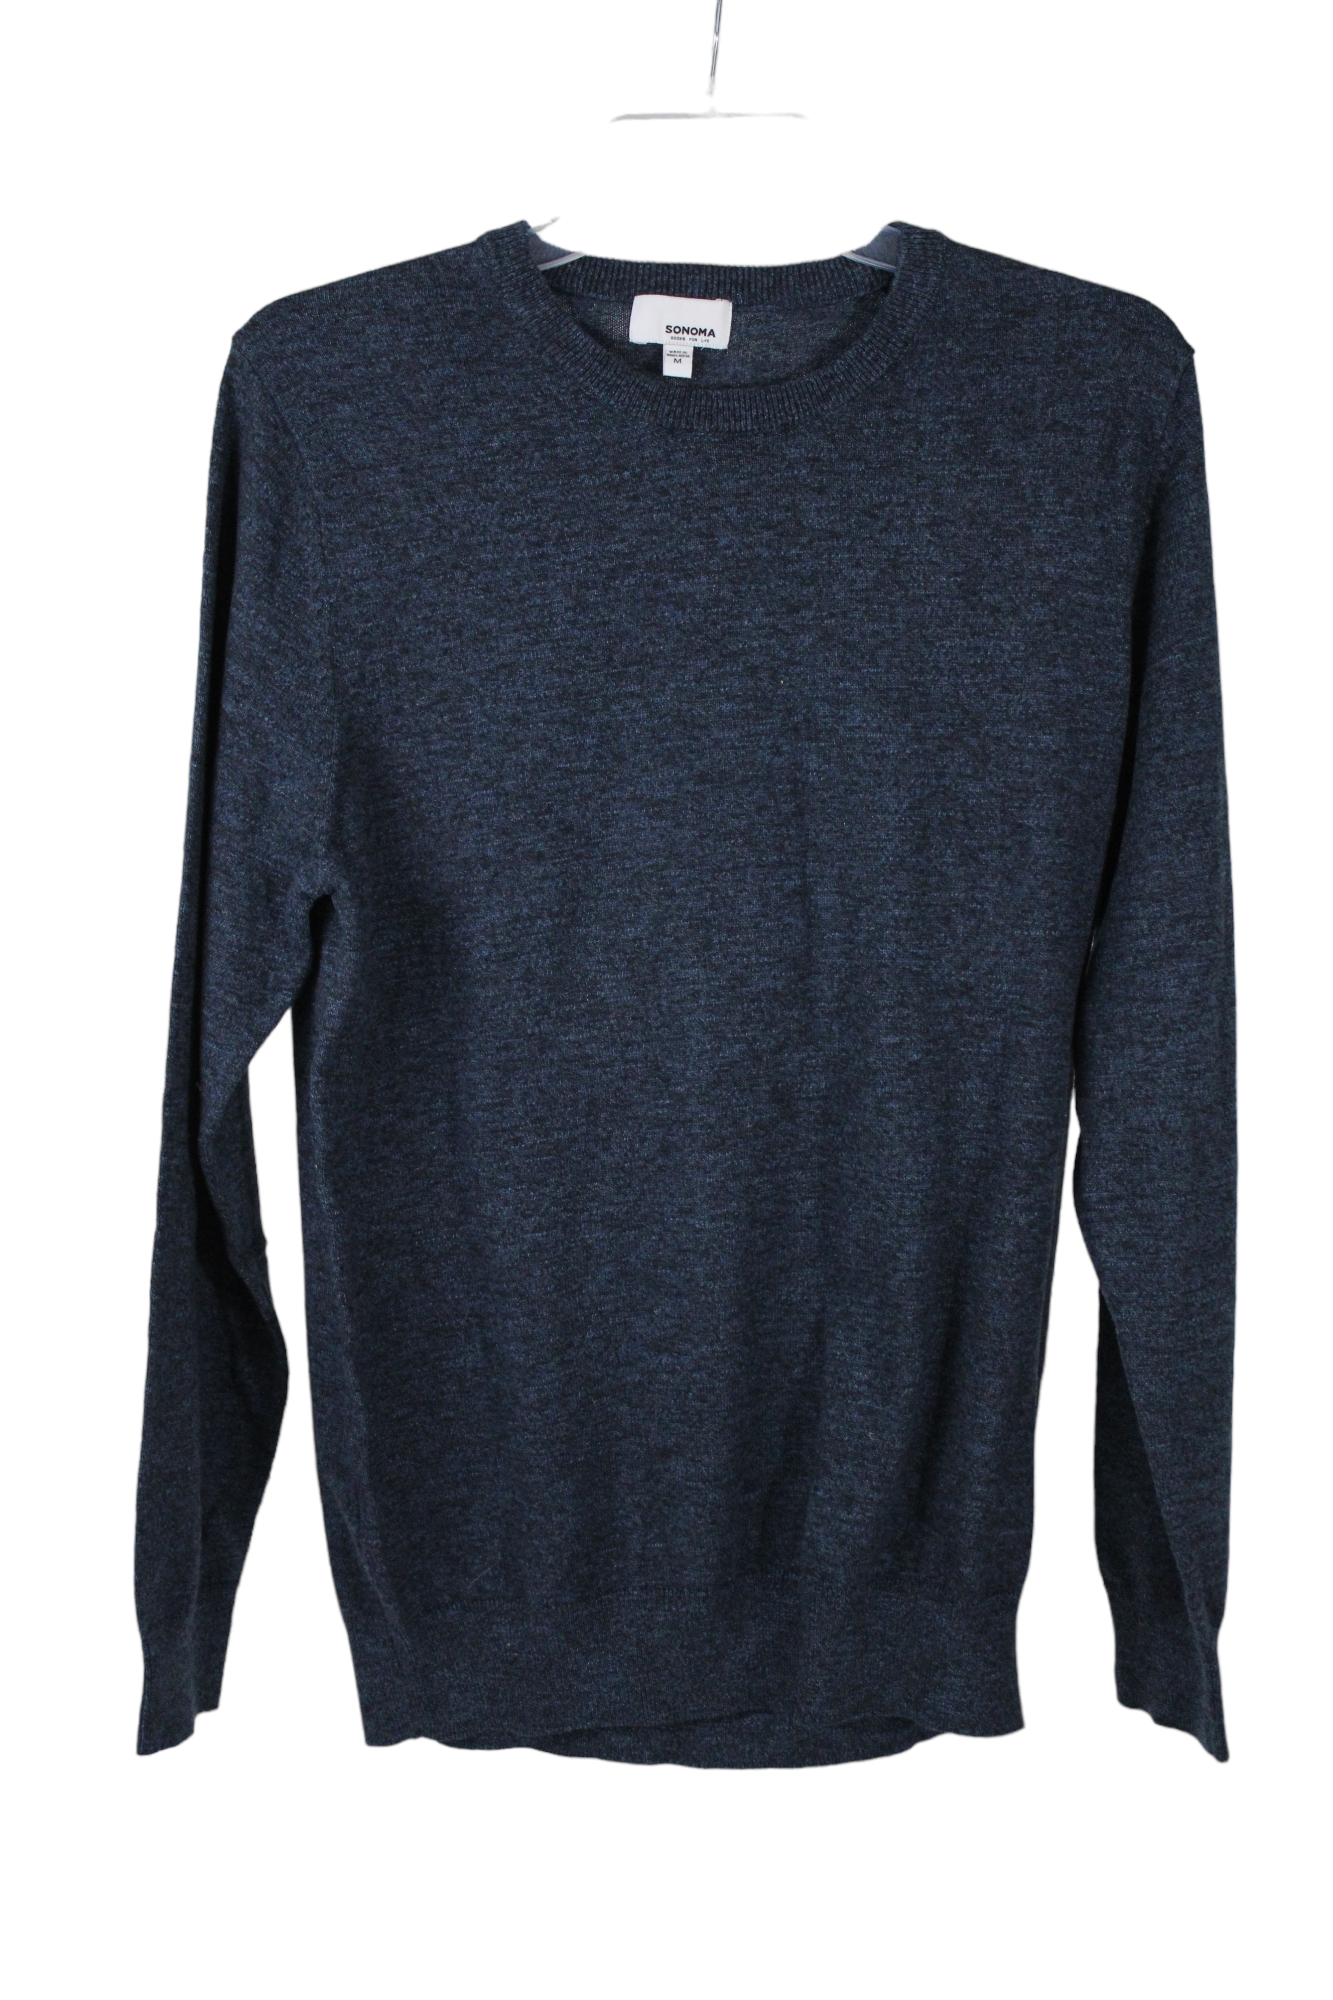 Sonoma Blue Knit Sweater | M